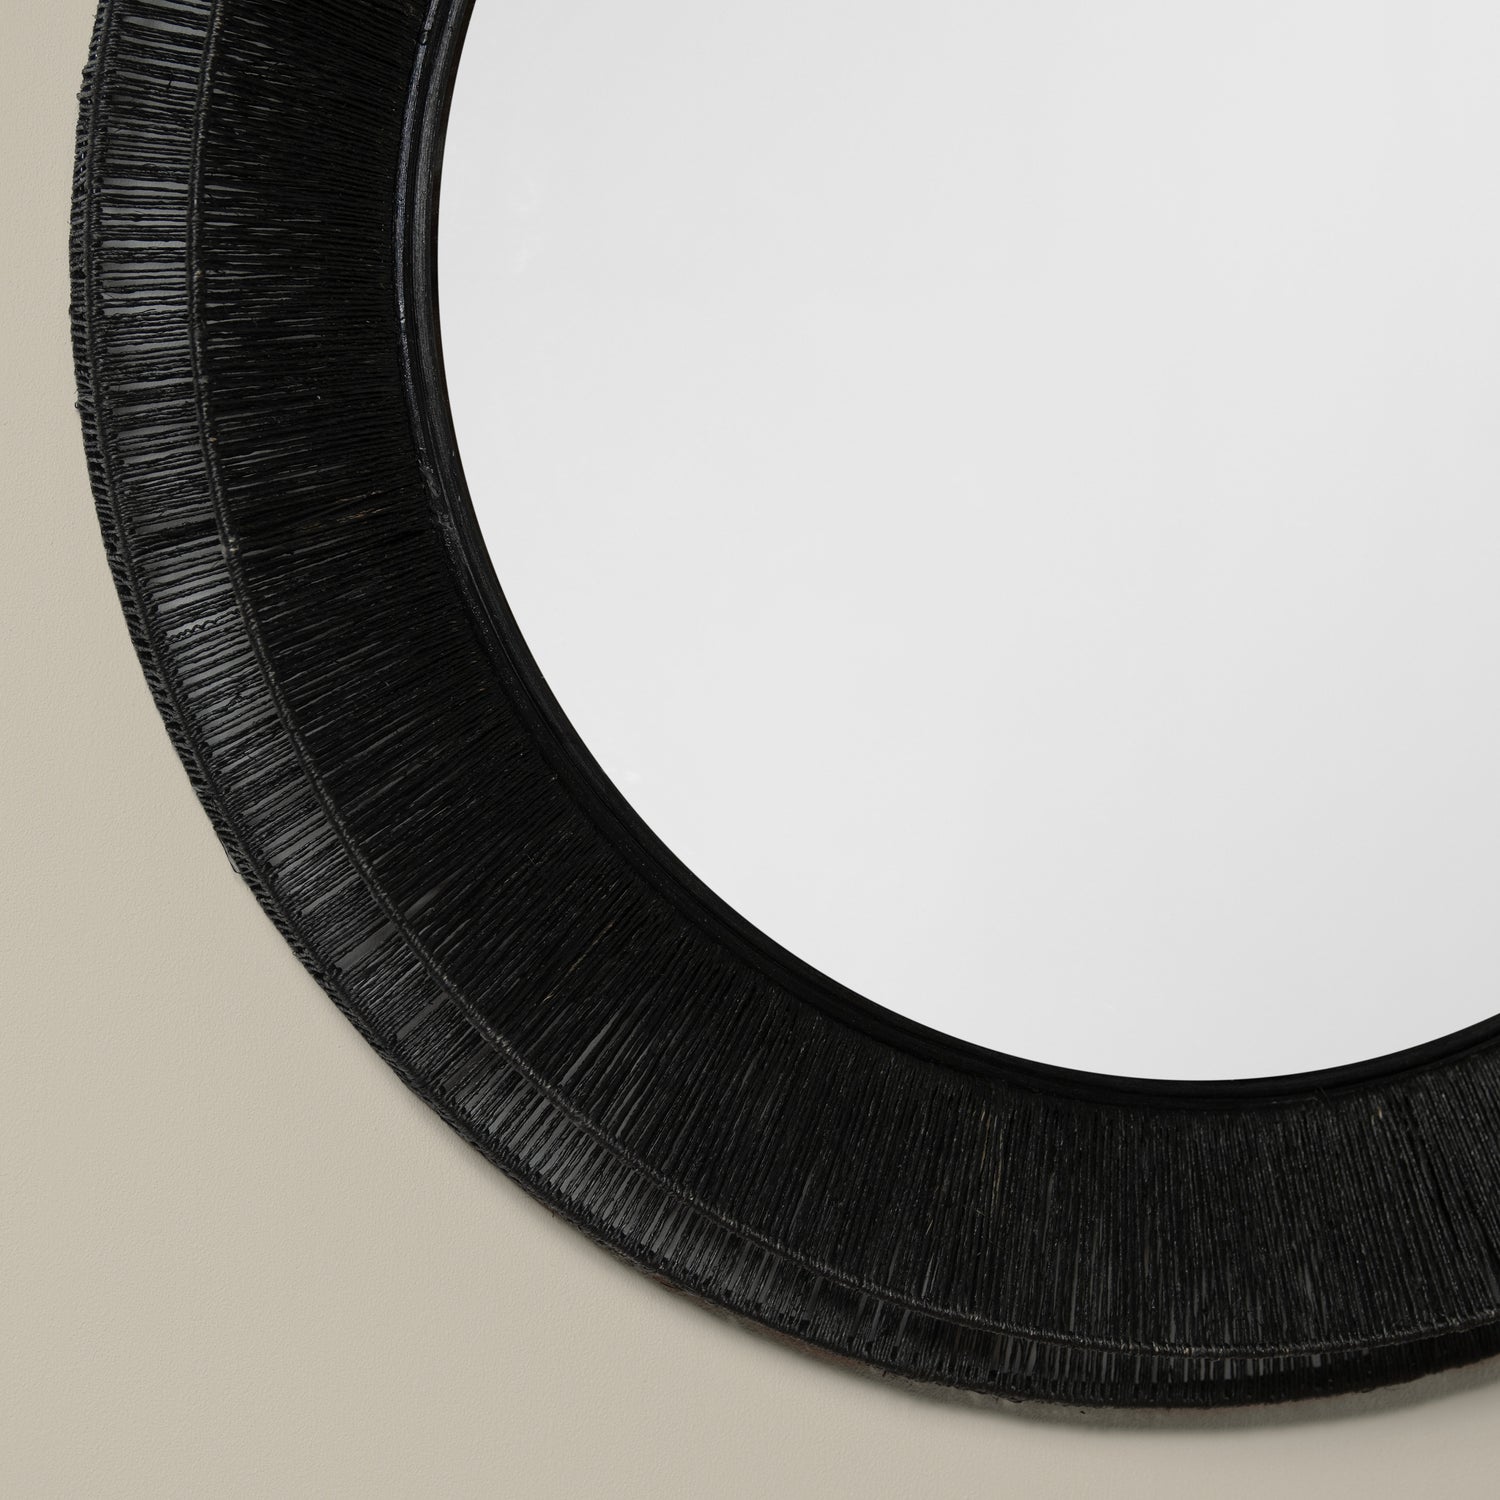 collins large jute mirror in black detail